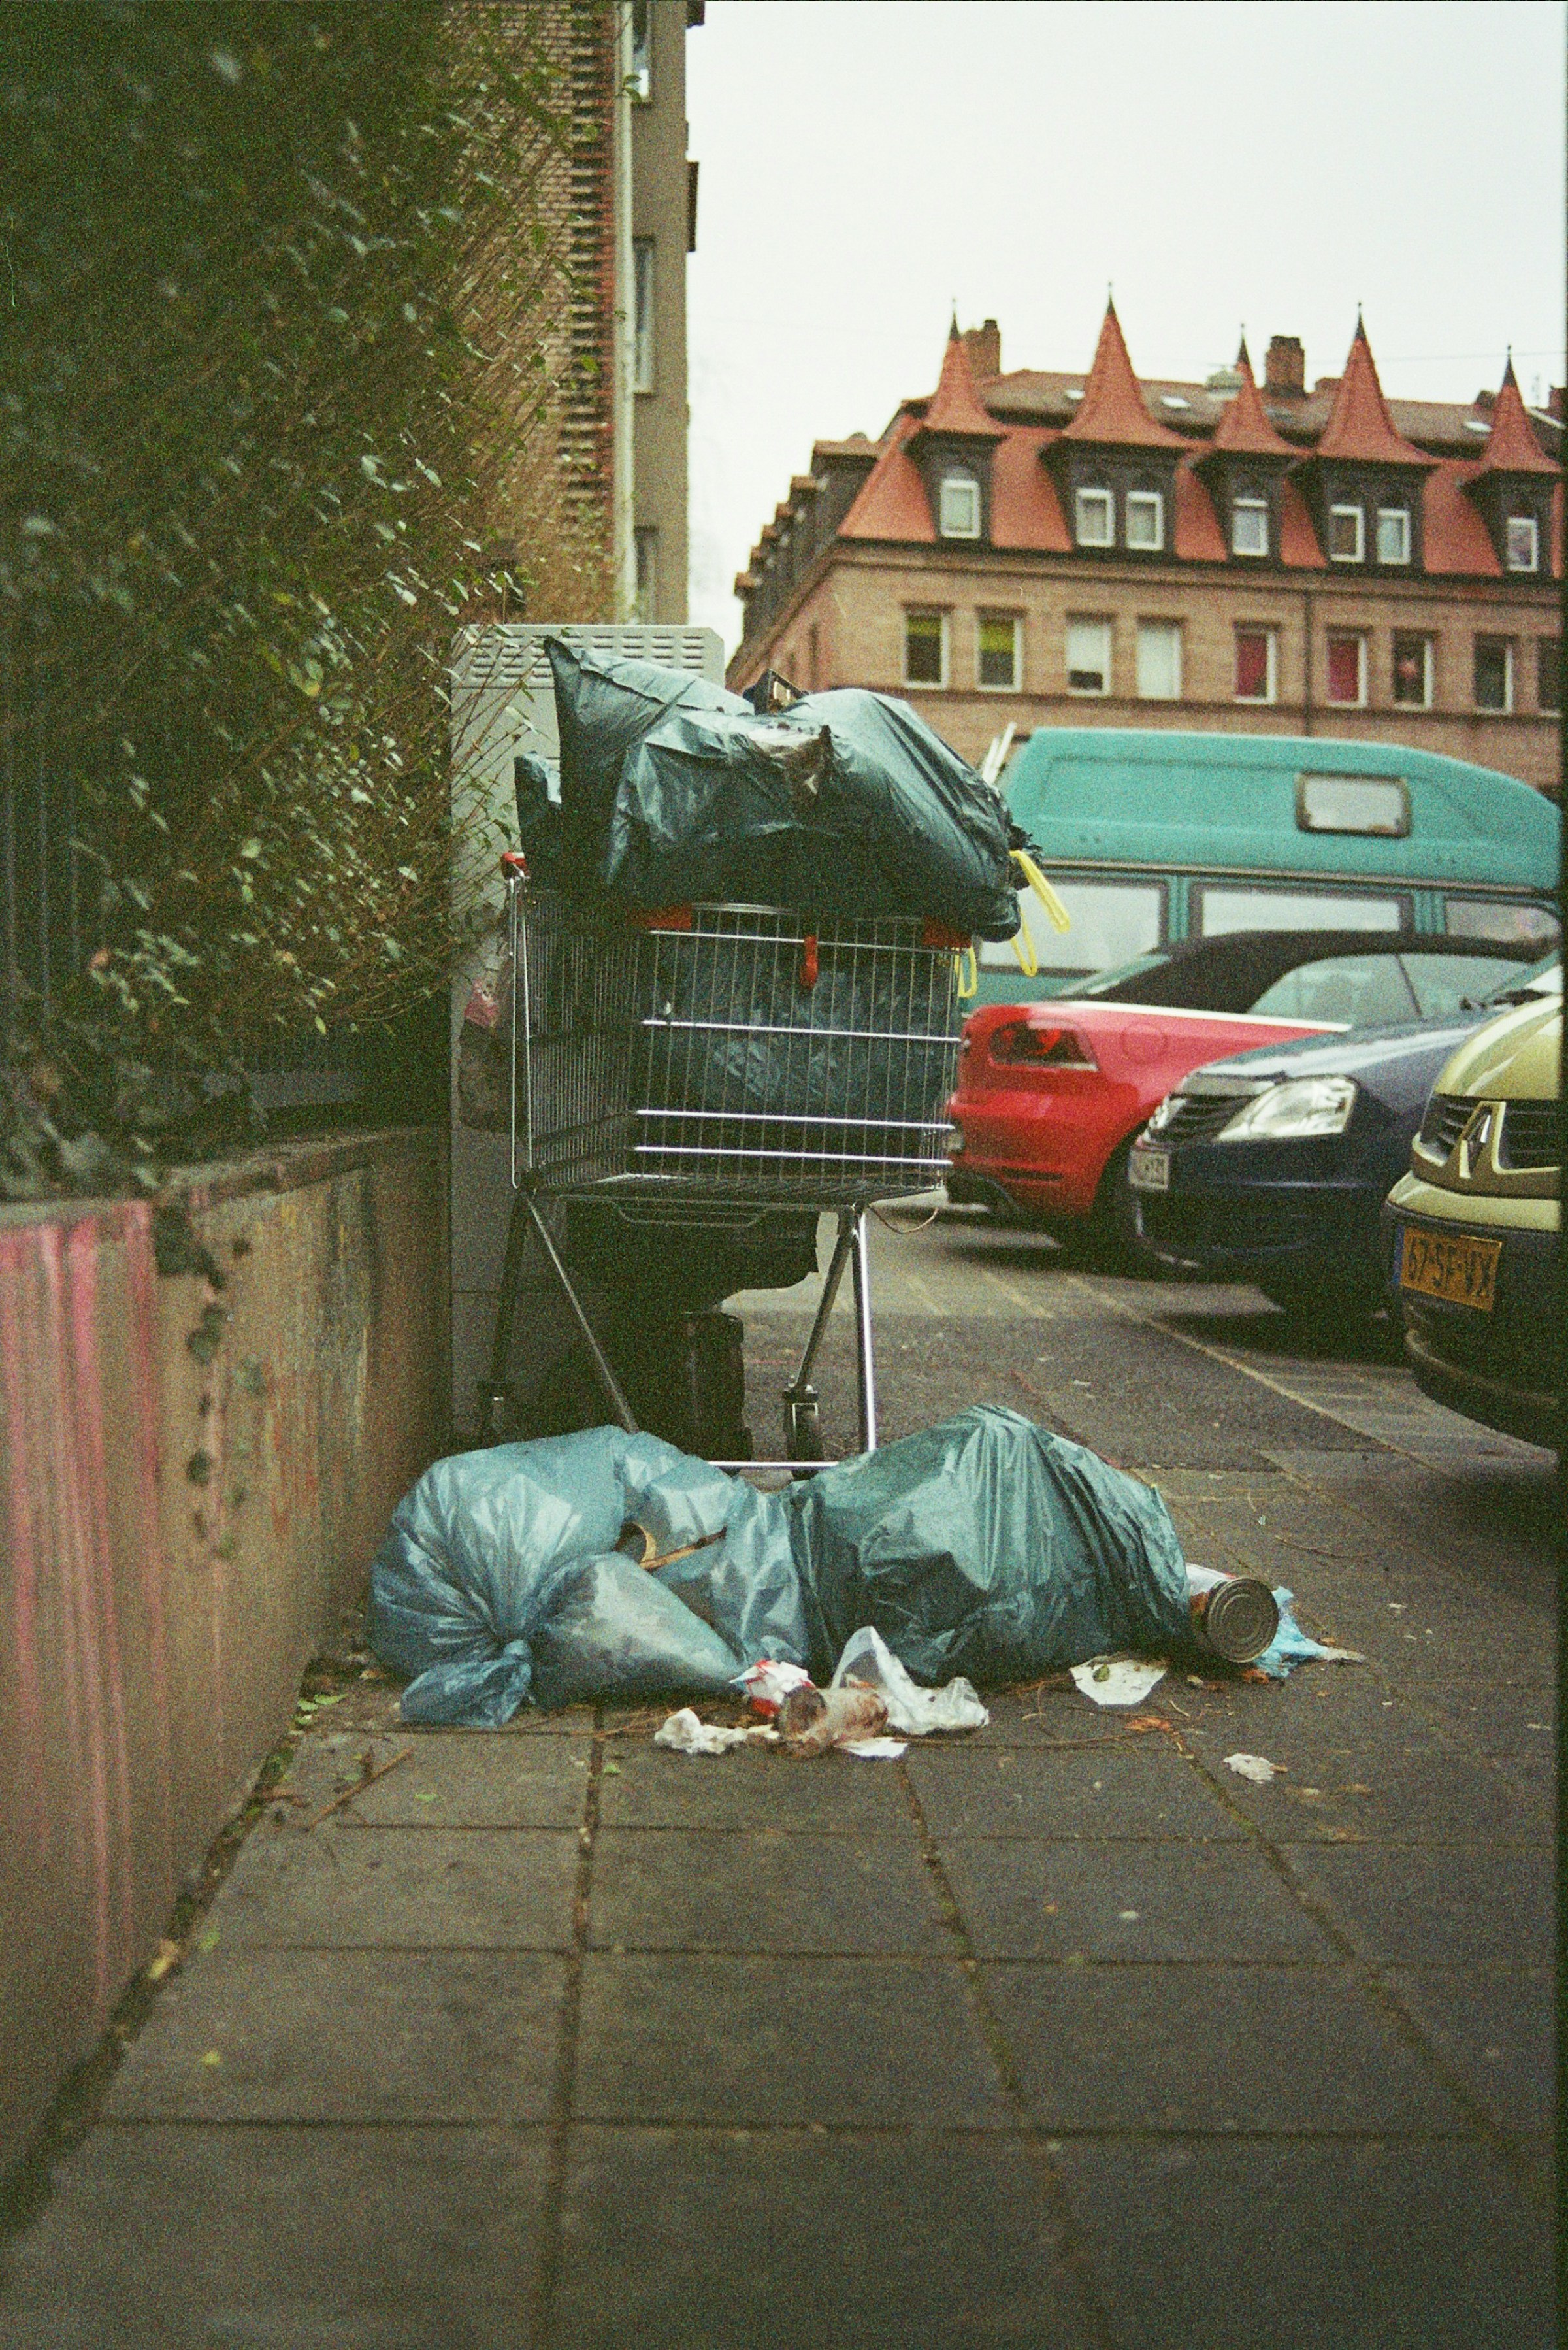 Laundry thrown on sidewalk | Source: Unsplash